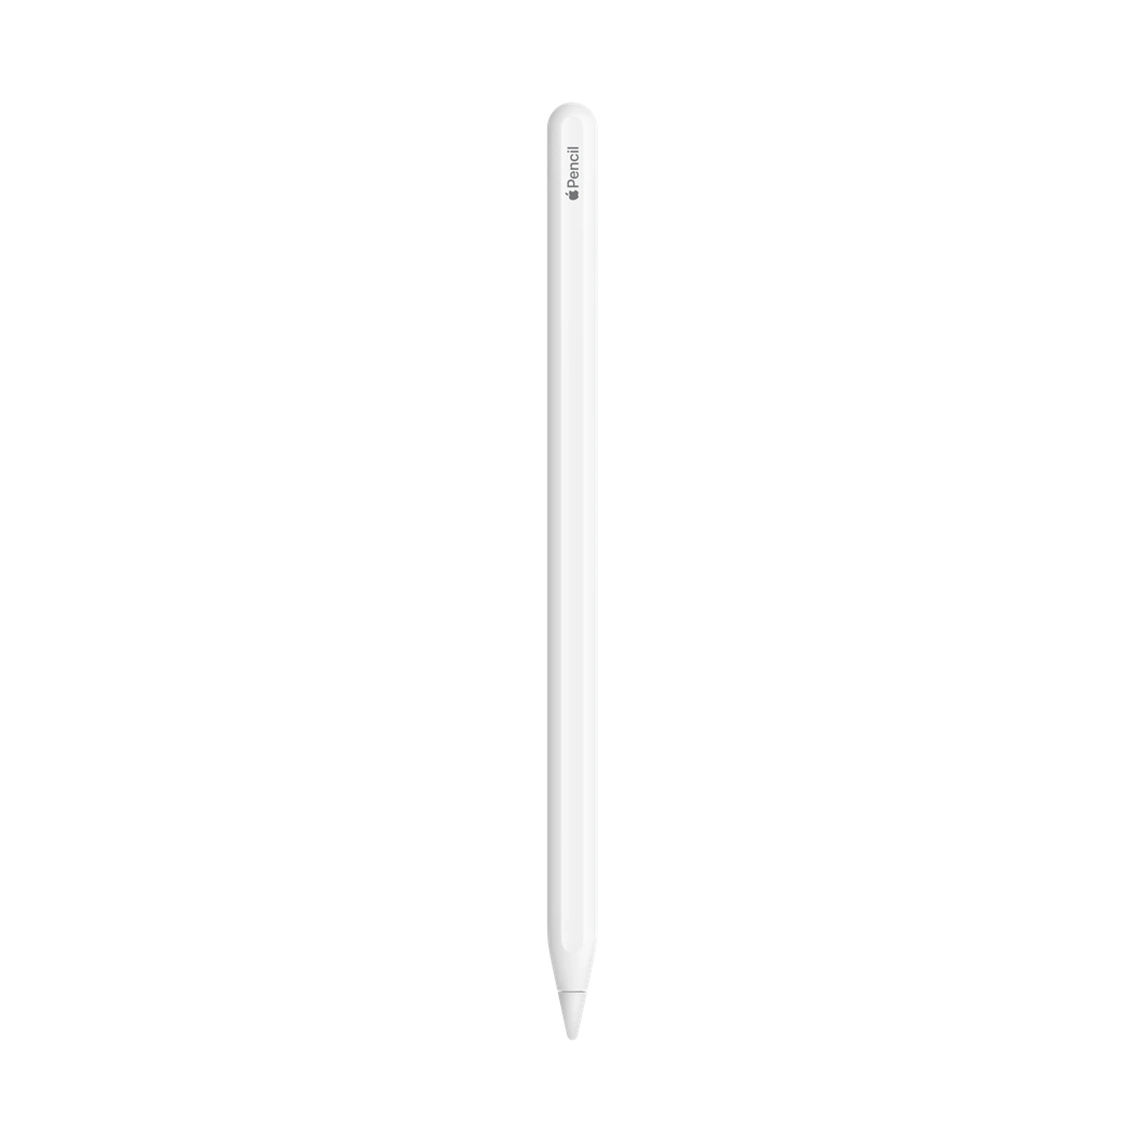 Apple iPad Pro M1 12.9-inch 2TB Wi-Fi+Cellular